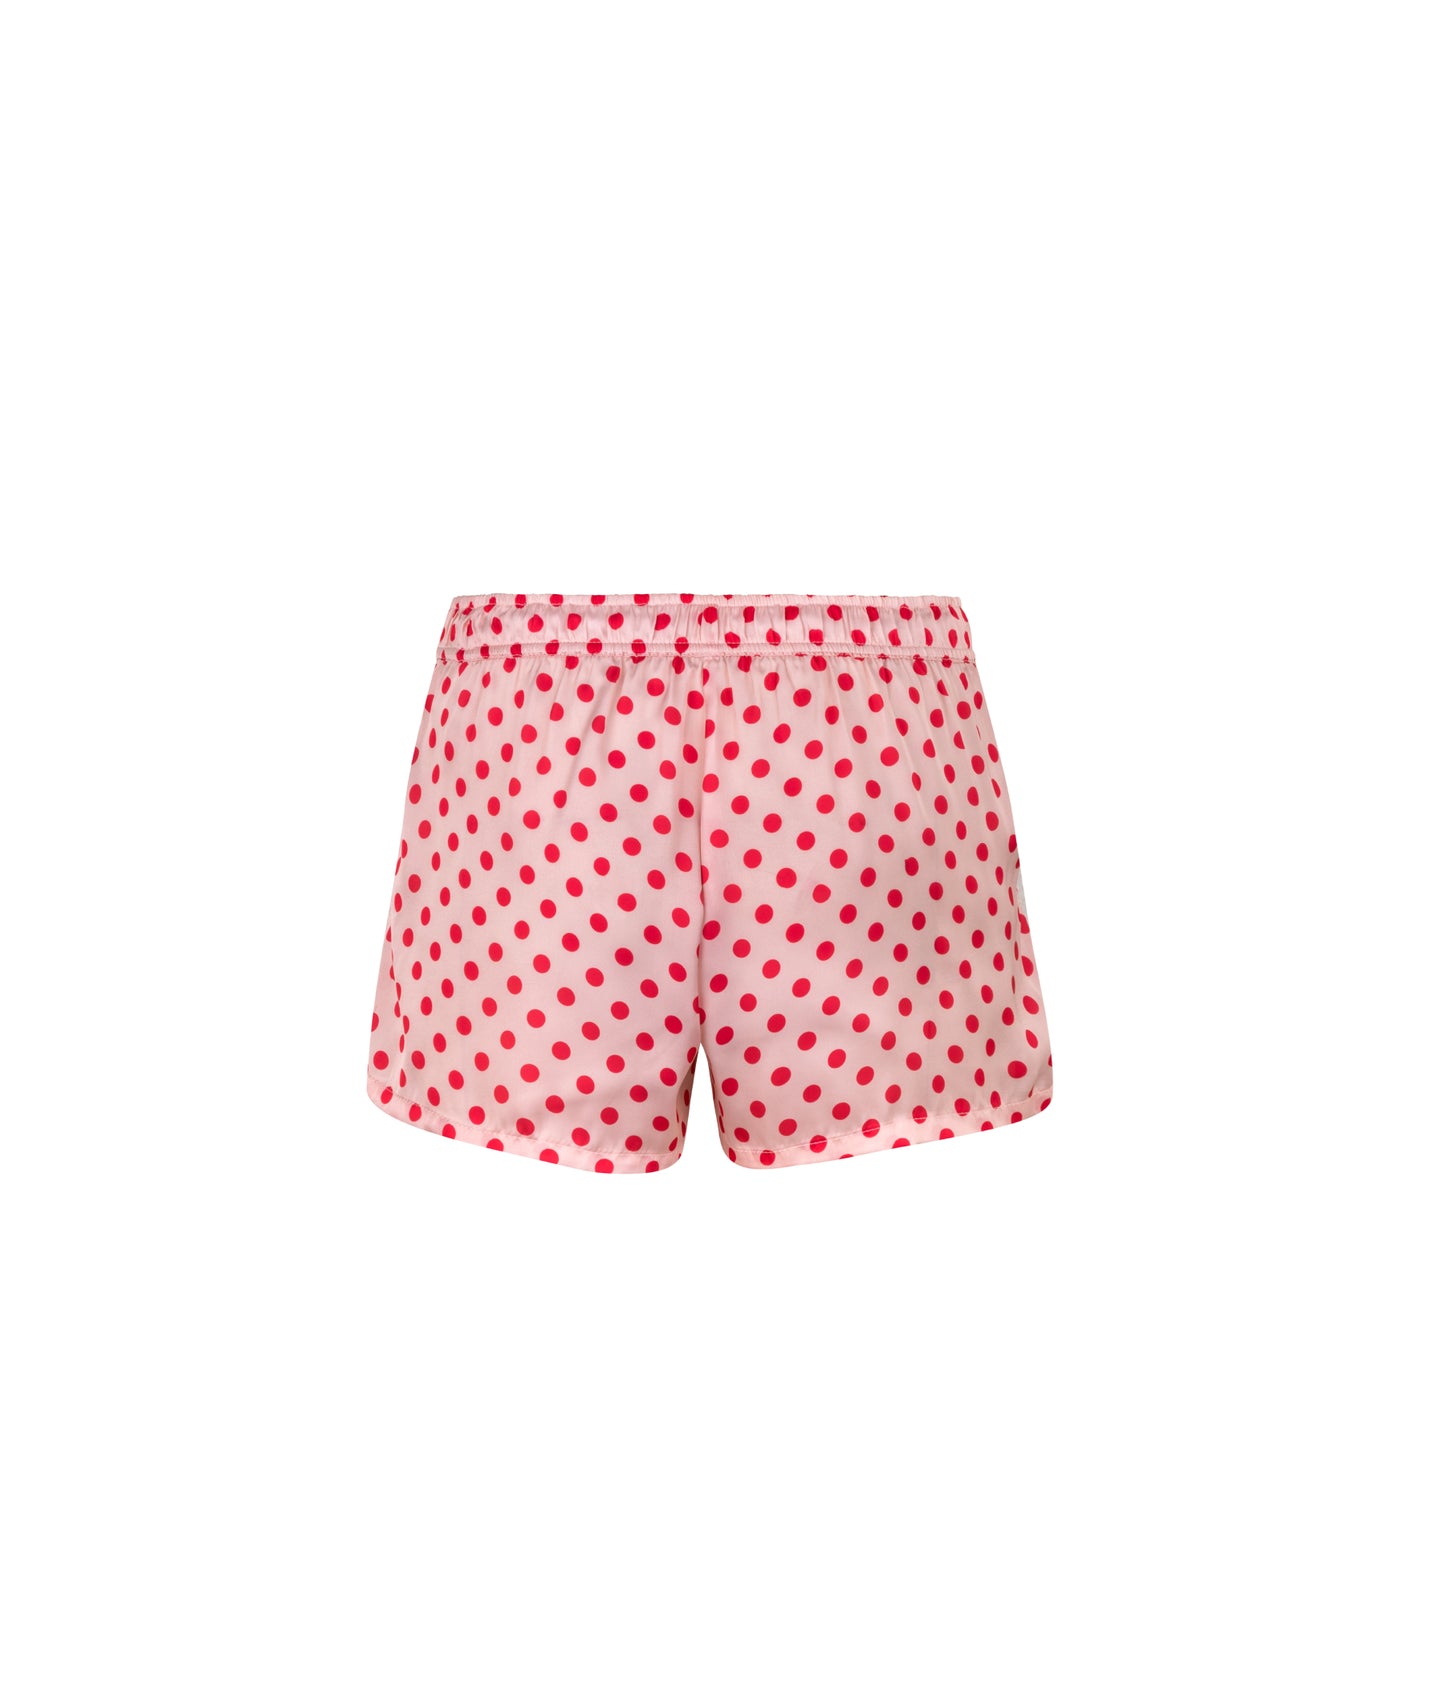 Verdelimon - Shorts - Santorini - Printed - Pink Dots - Back